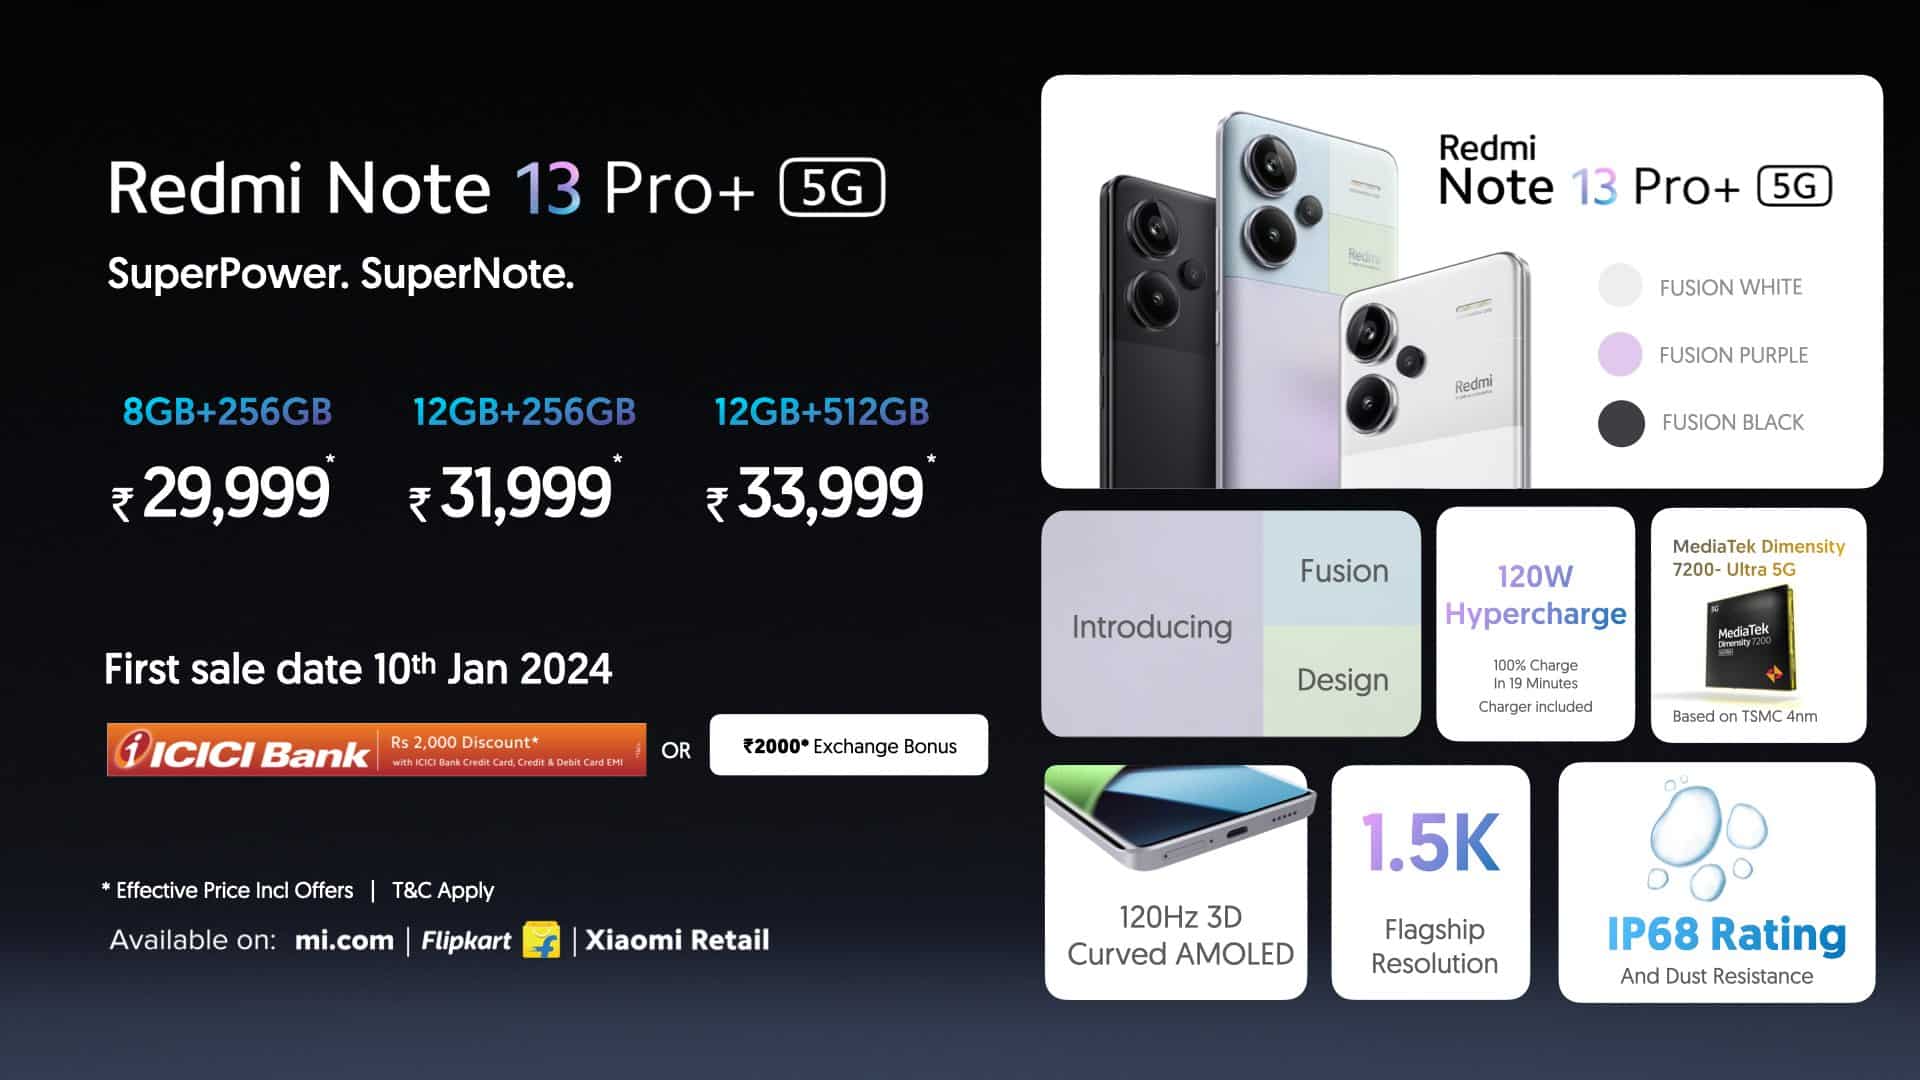 Redmi Note 13 Pro+ 5G - Key Specs